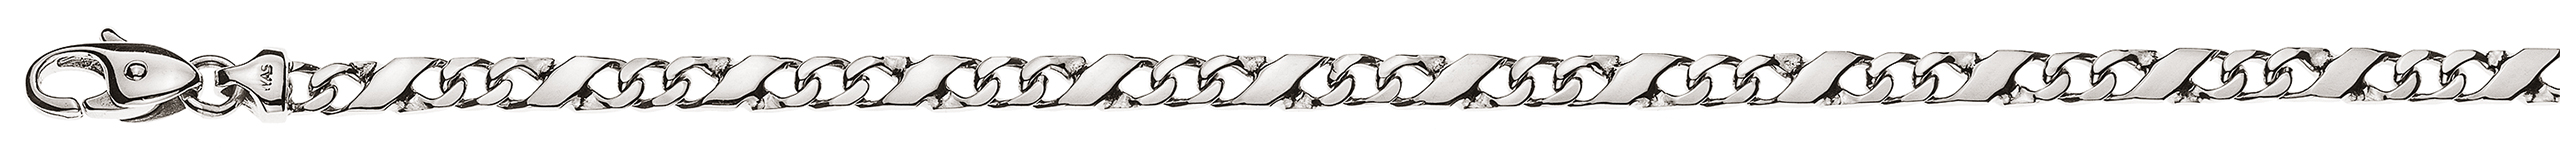 AURONOS Prestige Bracelet Carrera or blanc 18 carats 19cm 4mm